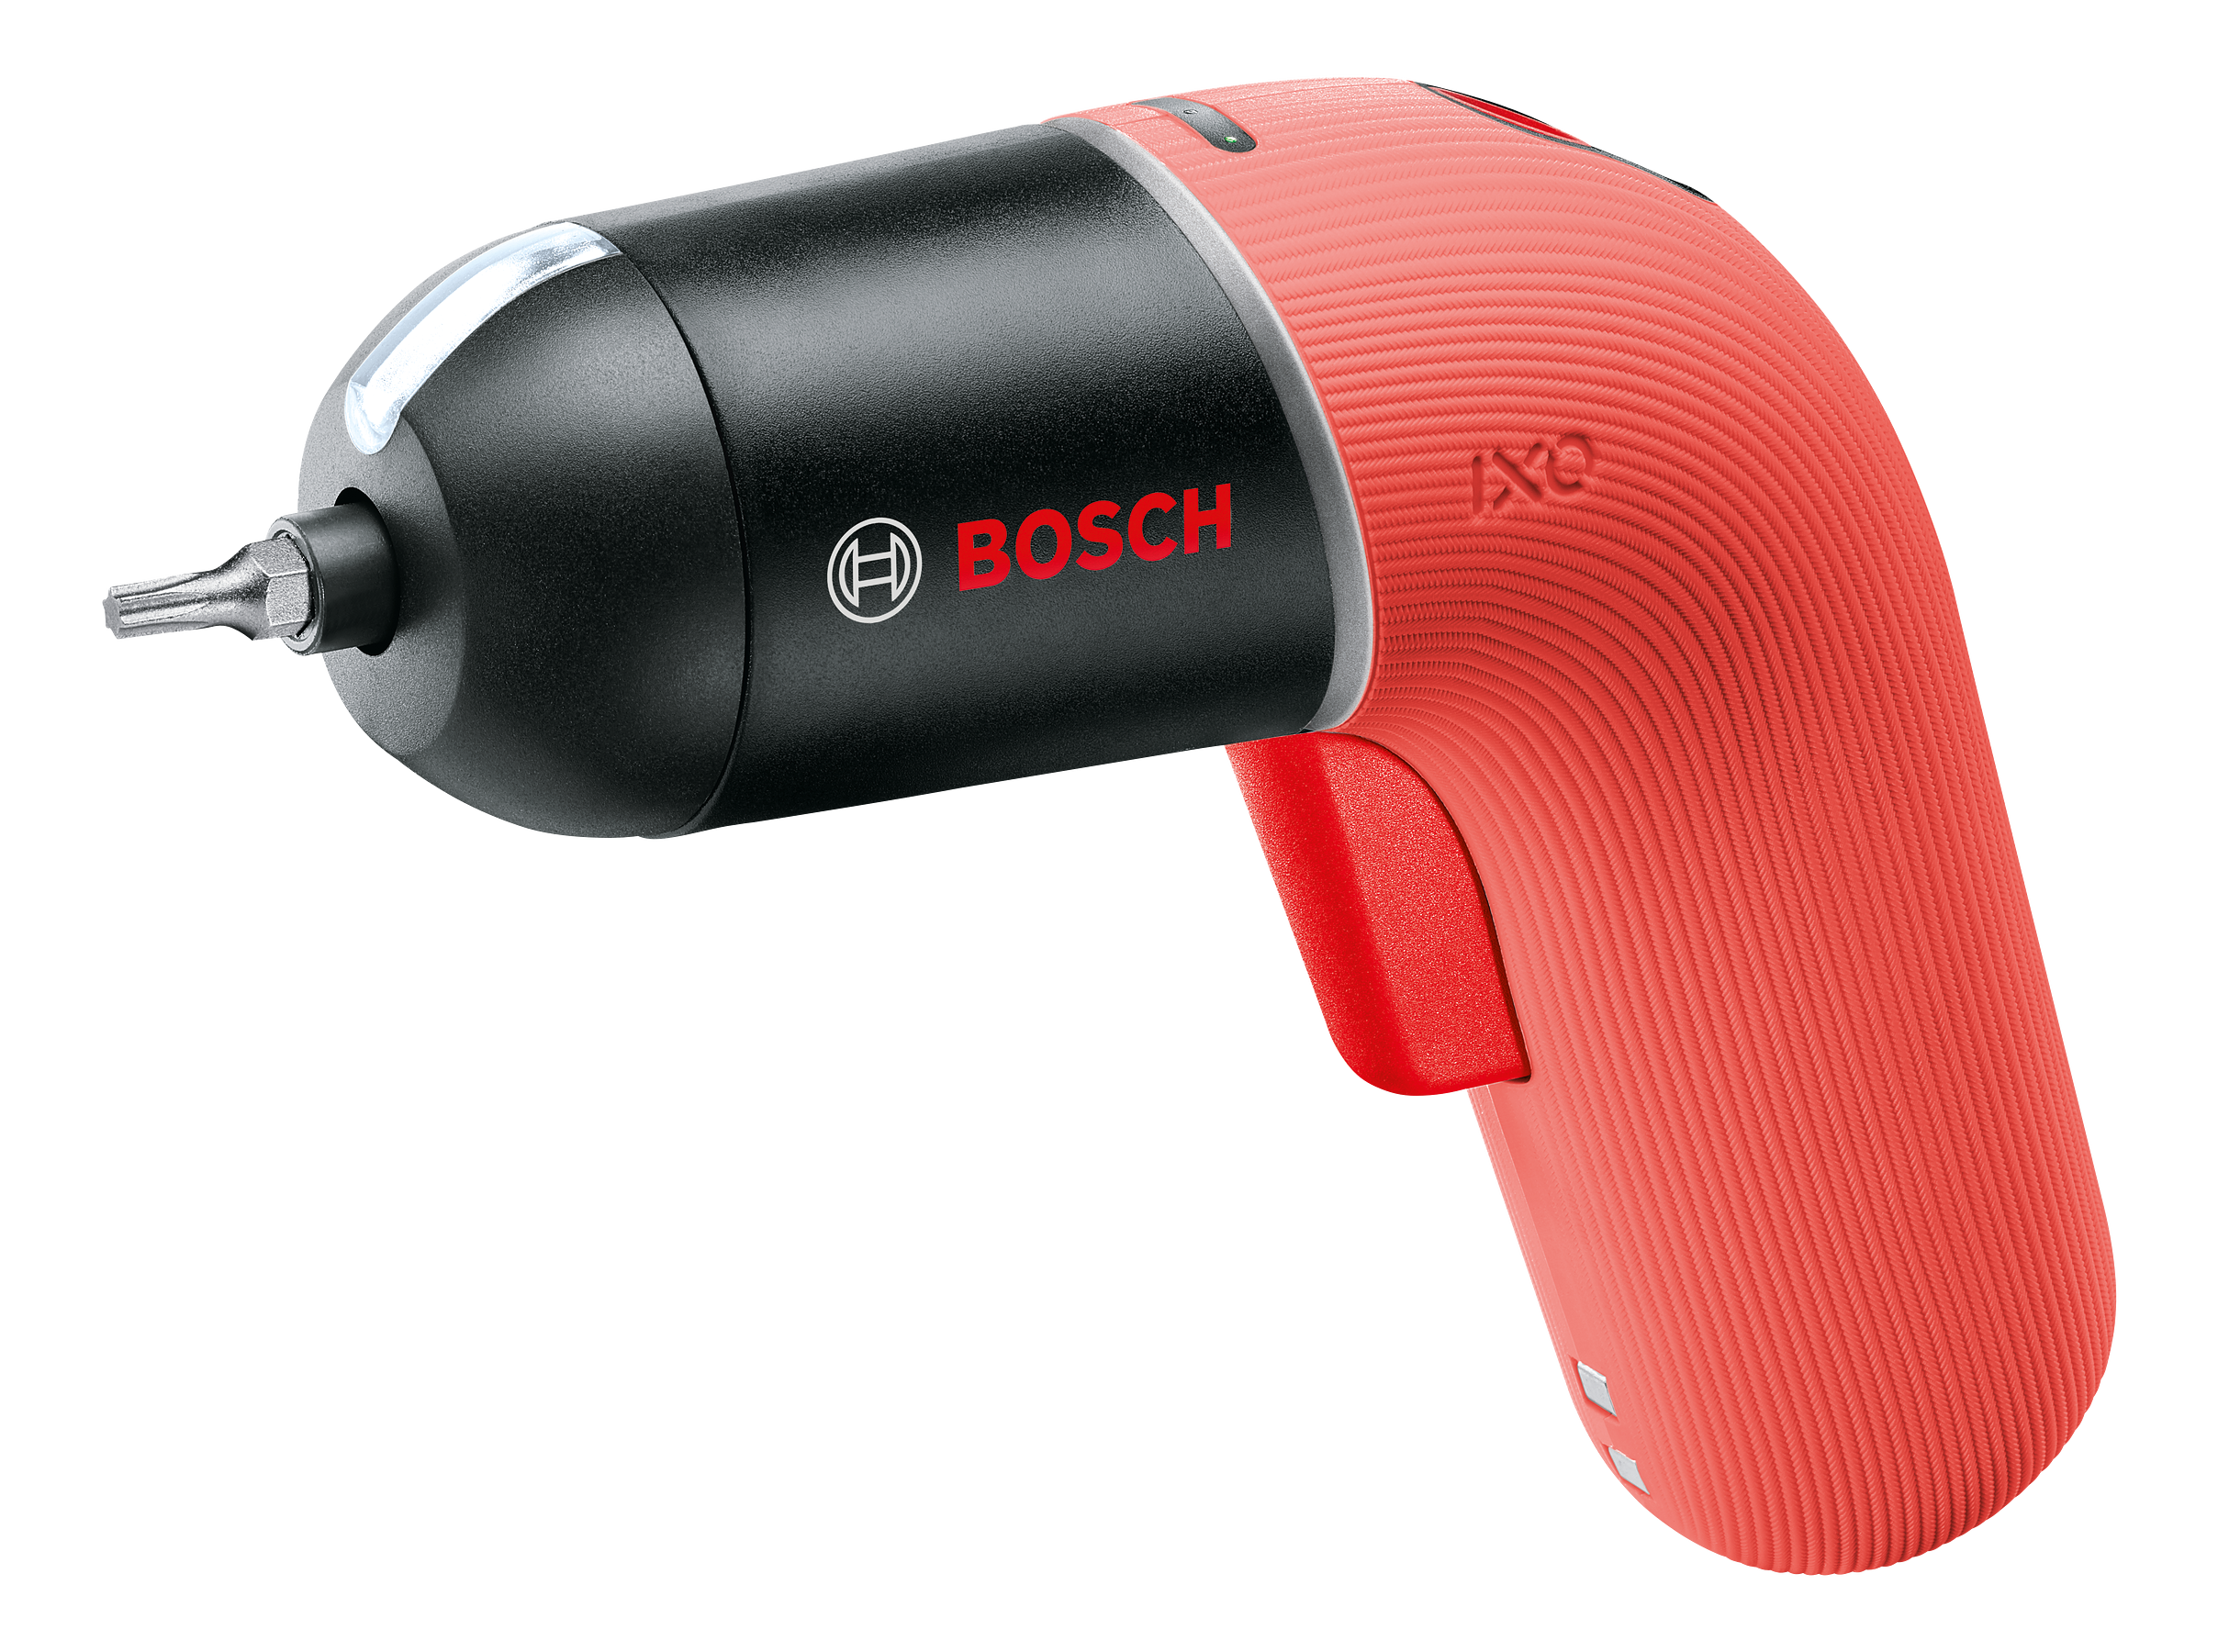 Bosch professional La Batterie PBA 18V 2.5Ah Noir